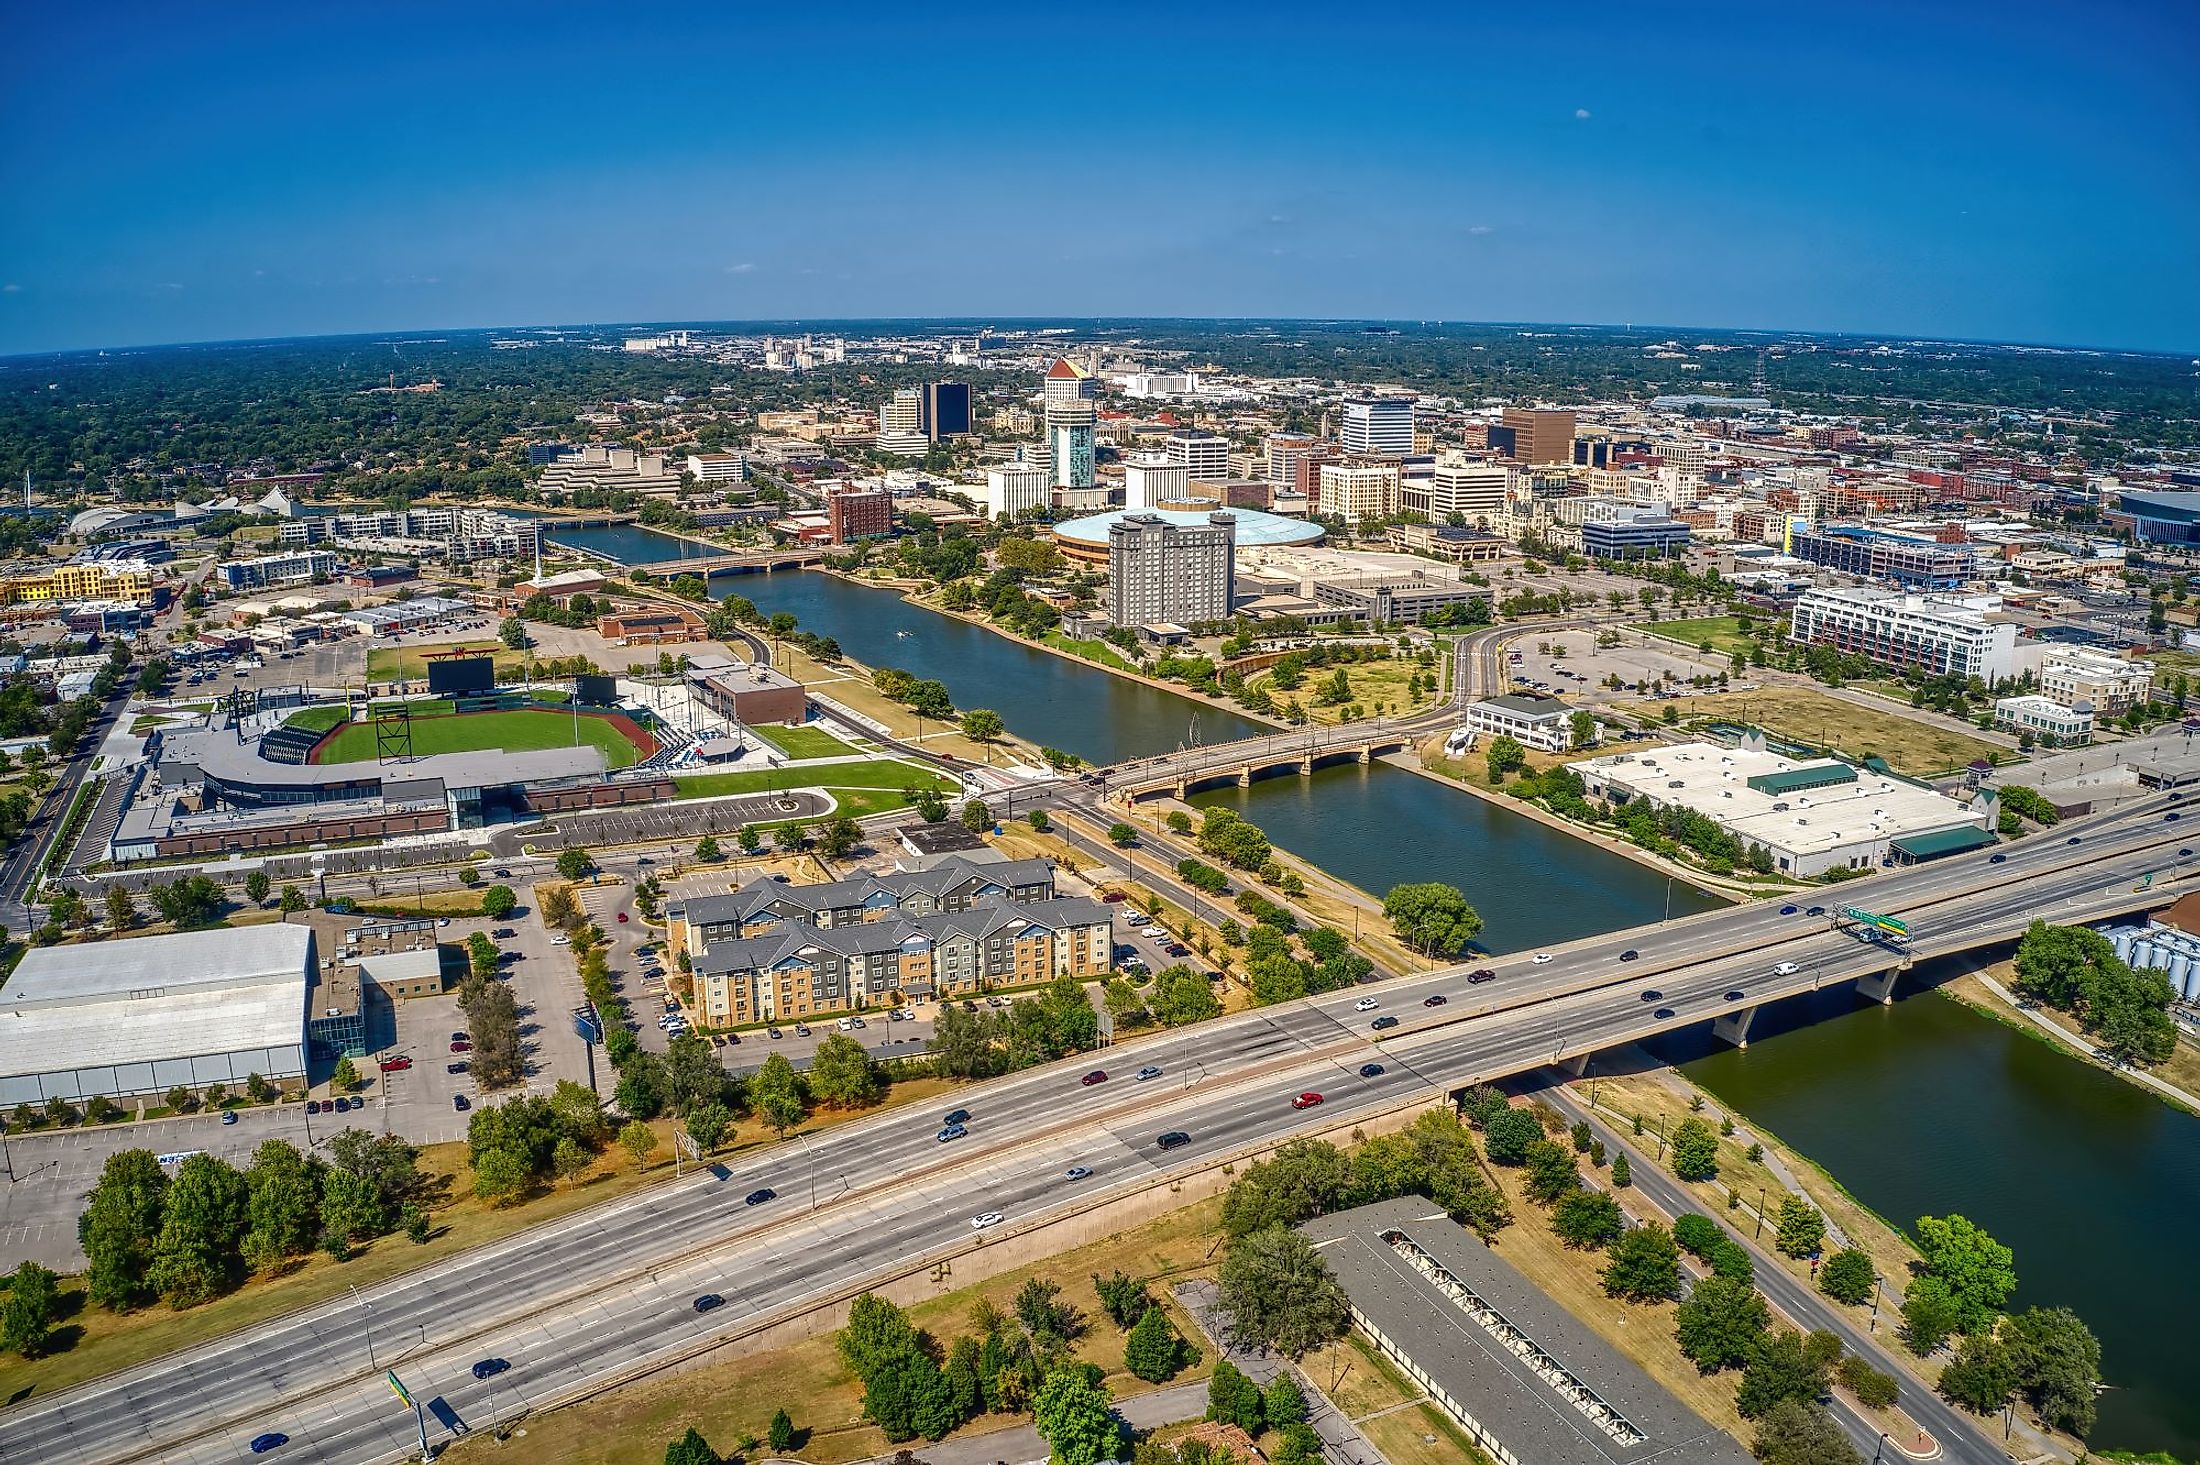 Aerial view of the population center of Wichita, Kansas.